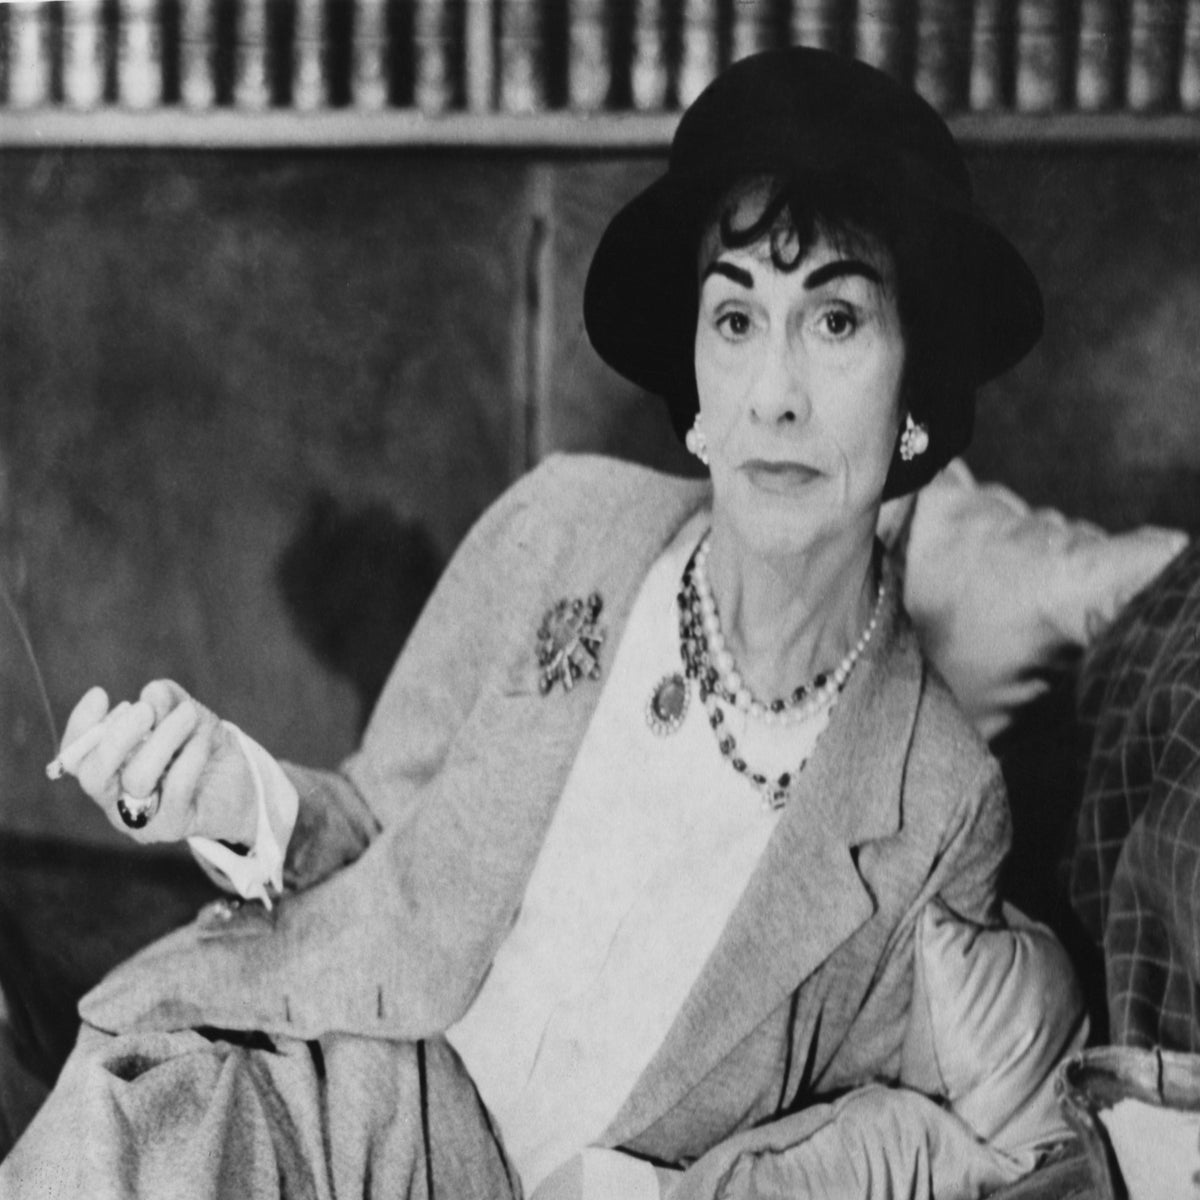 Coco Chanel fashion exhibition – 50th anniversary of her death